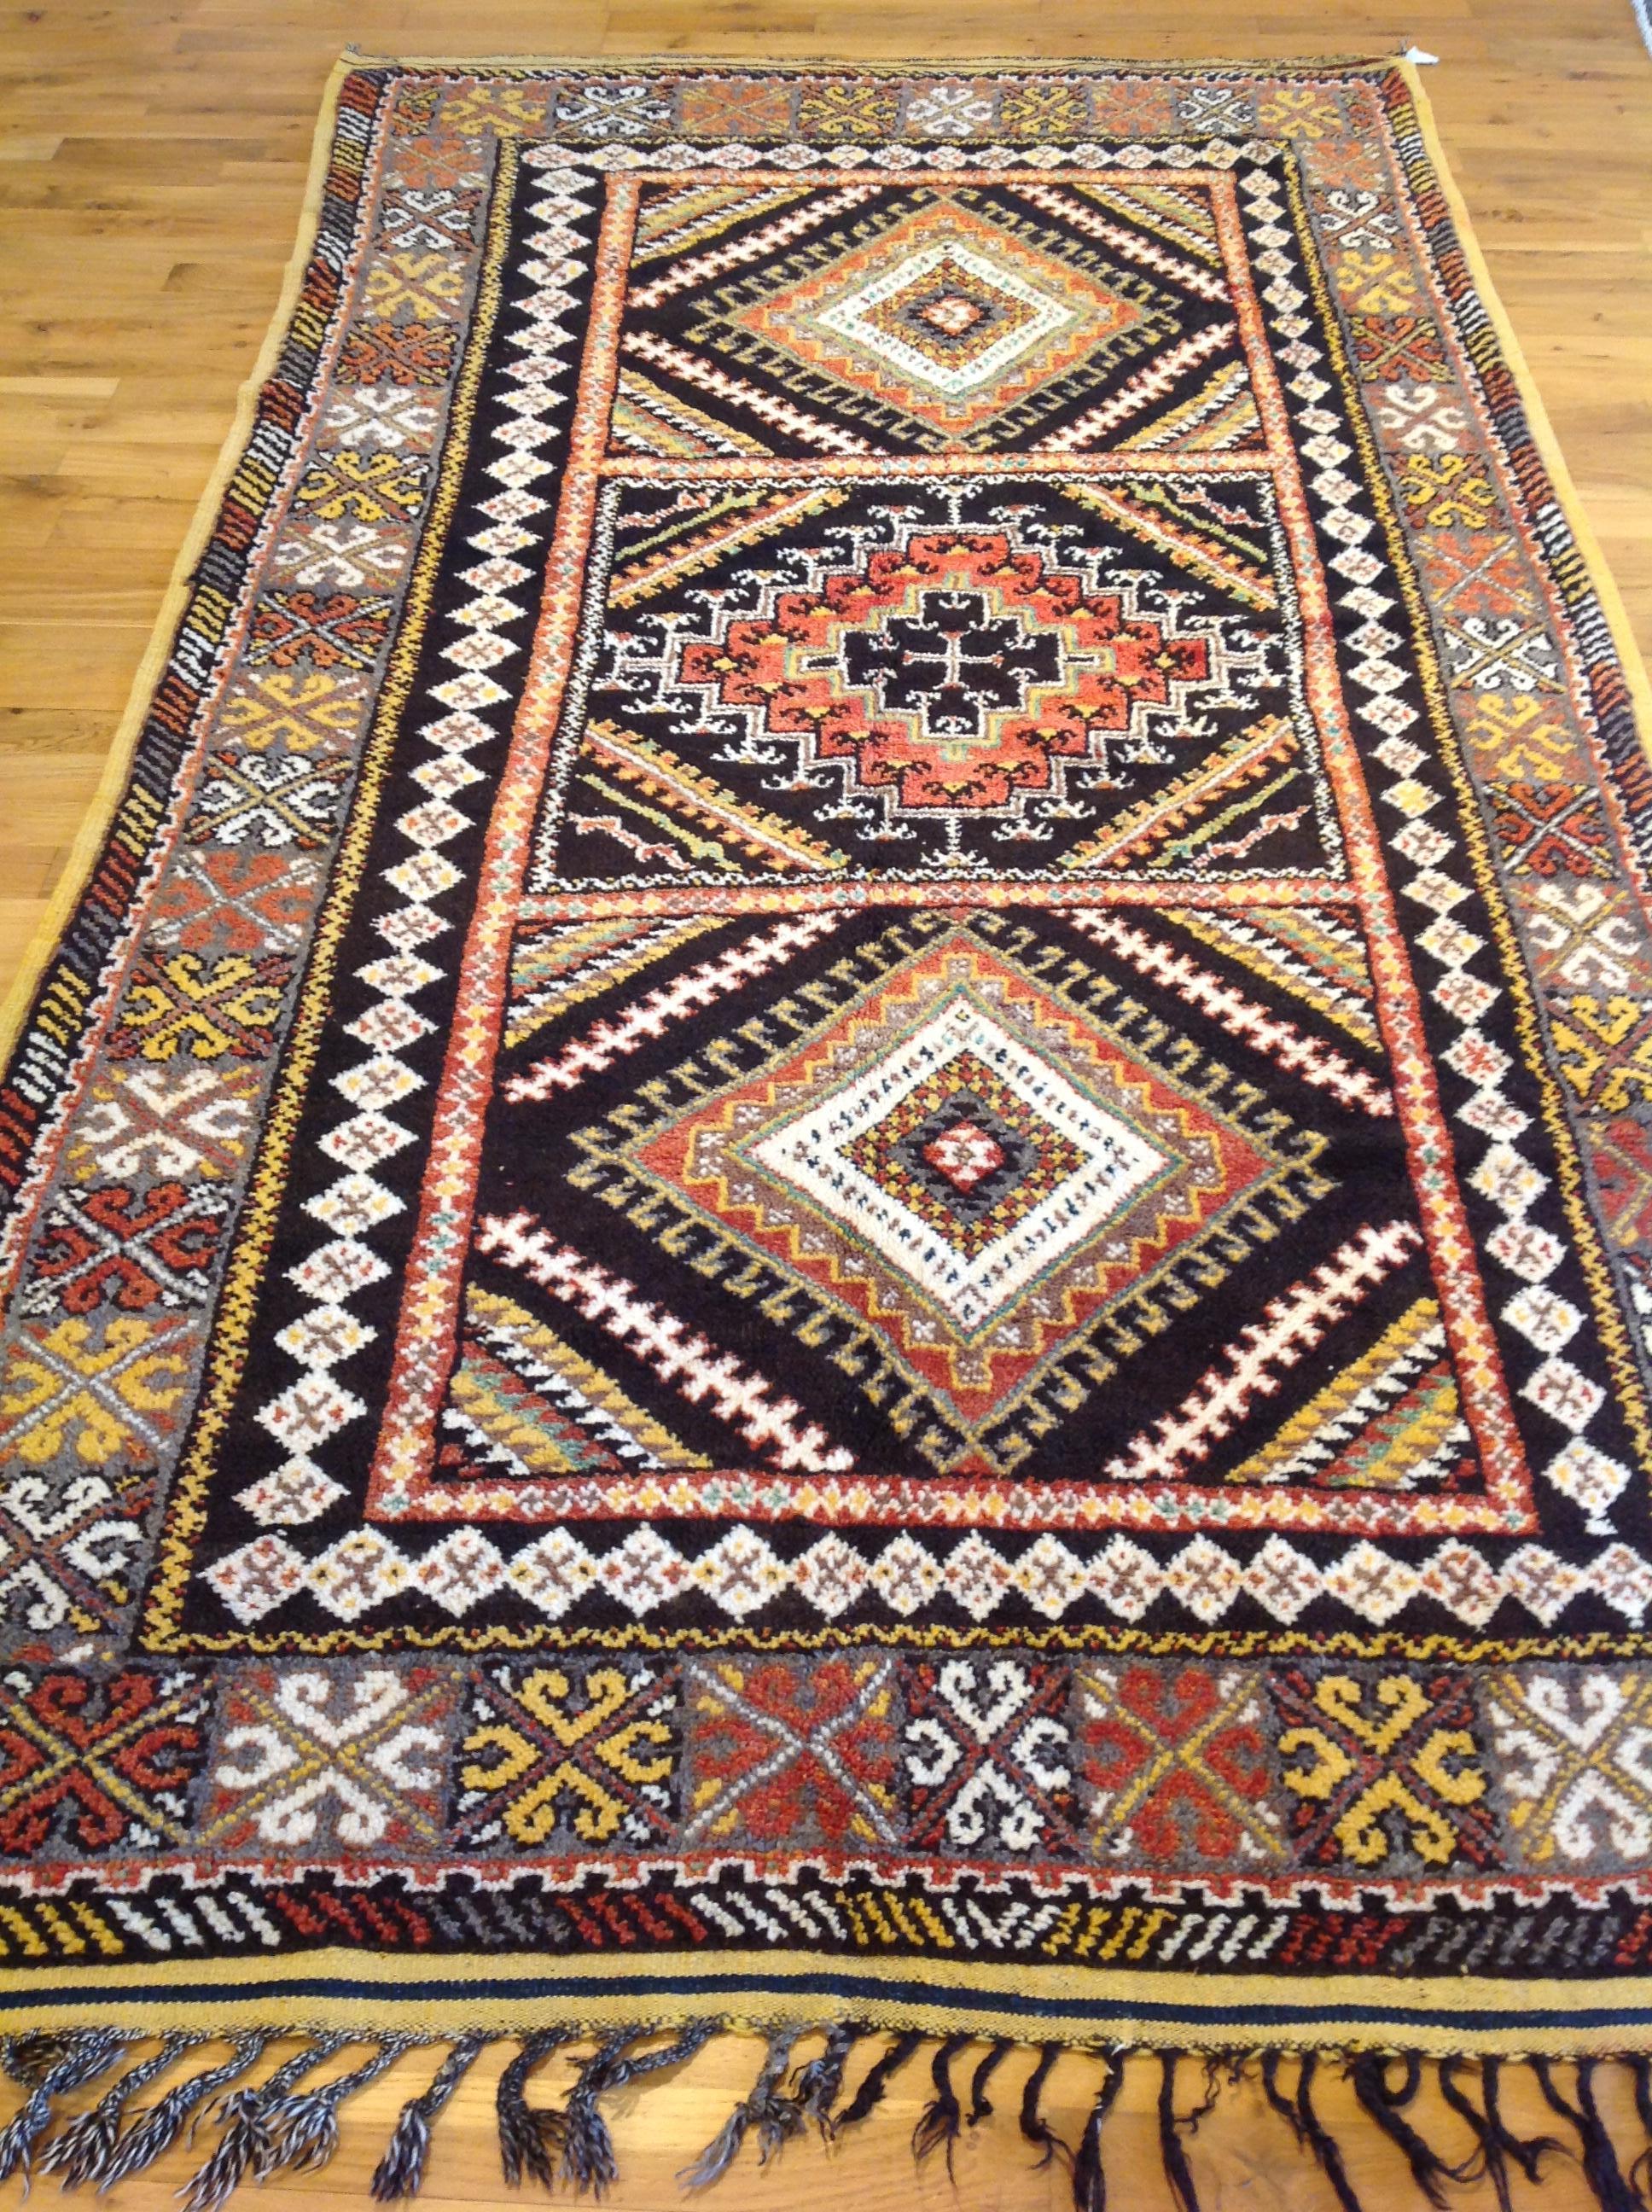 Vintage Tribal Moroccan rug
Measures: 5' x 8'6